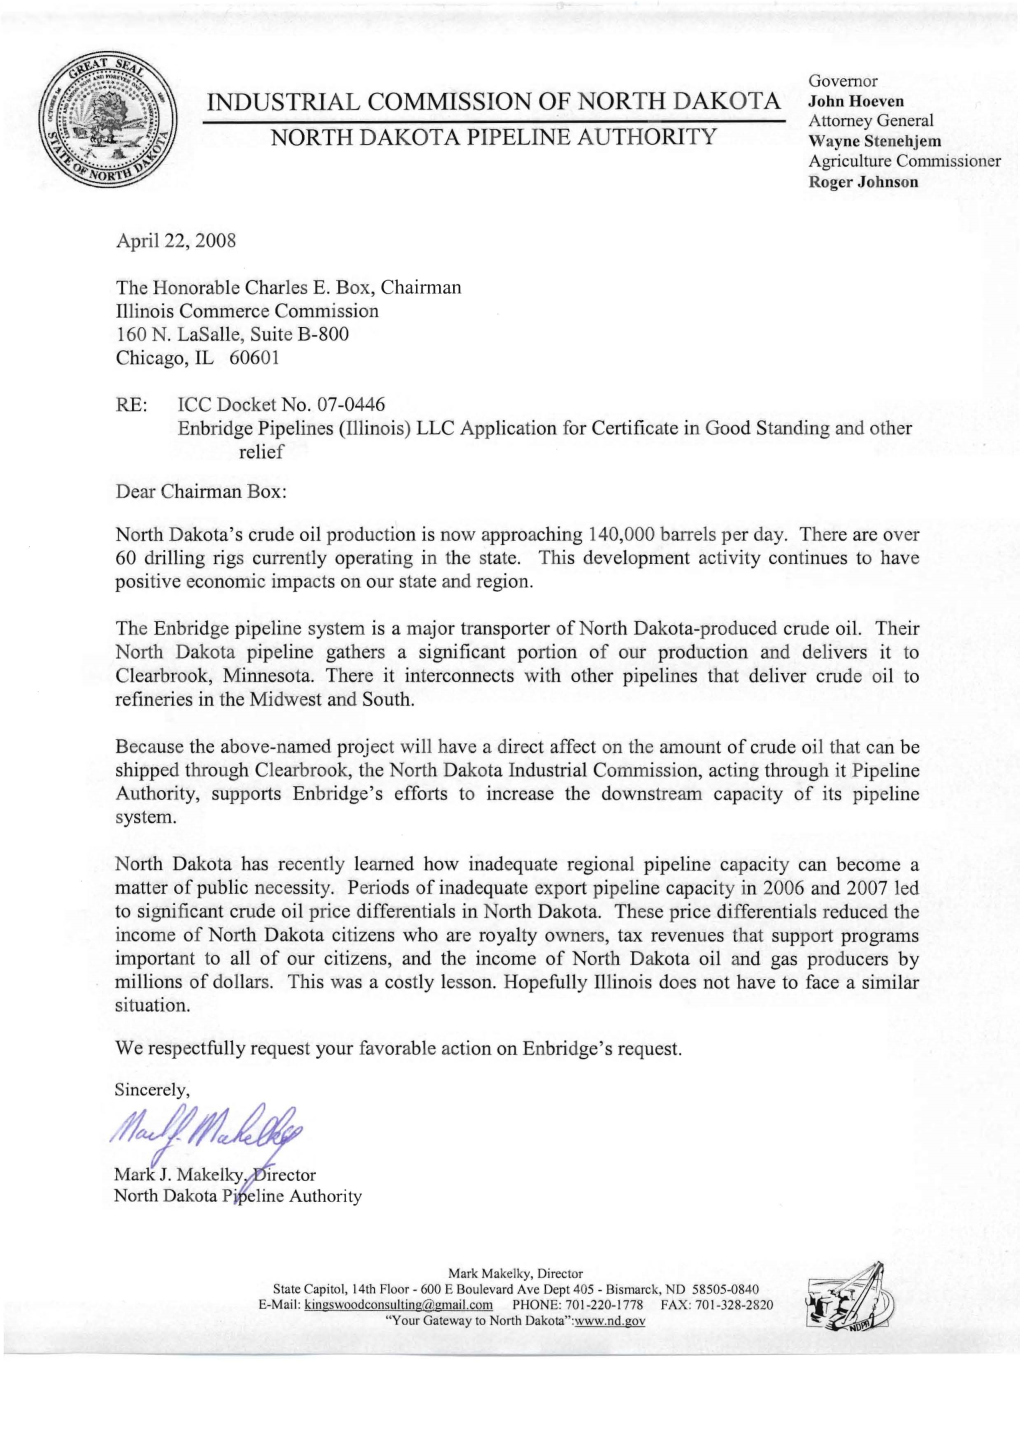 Enbridge Support Letter to the Illinois Commerce Commission